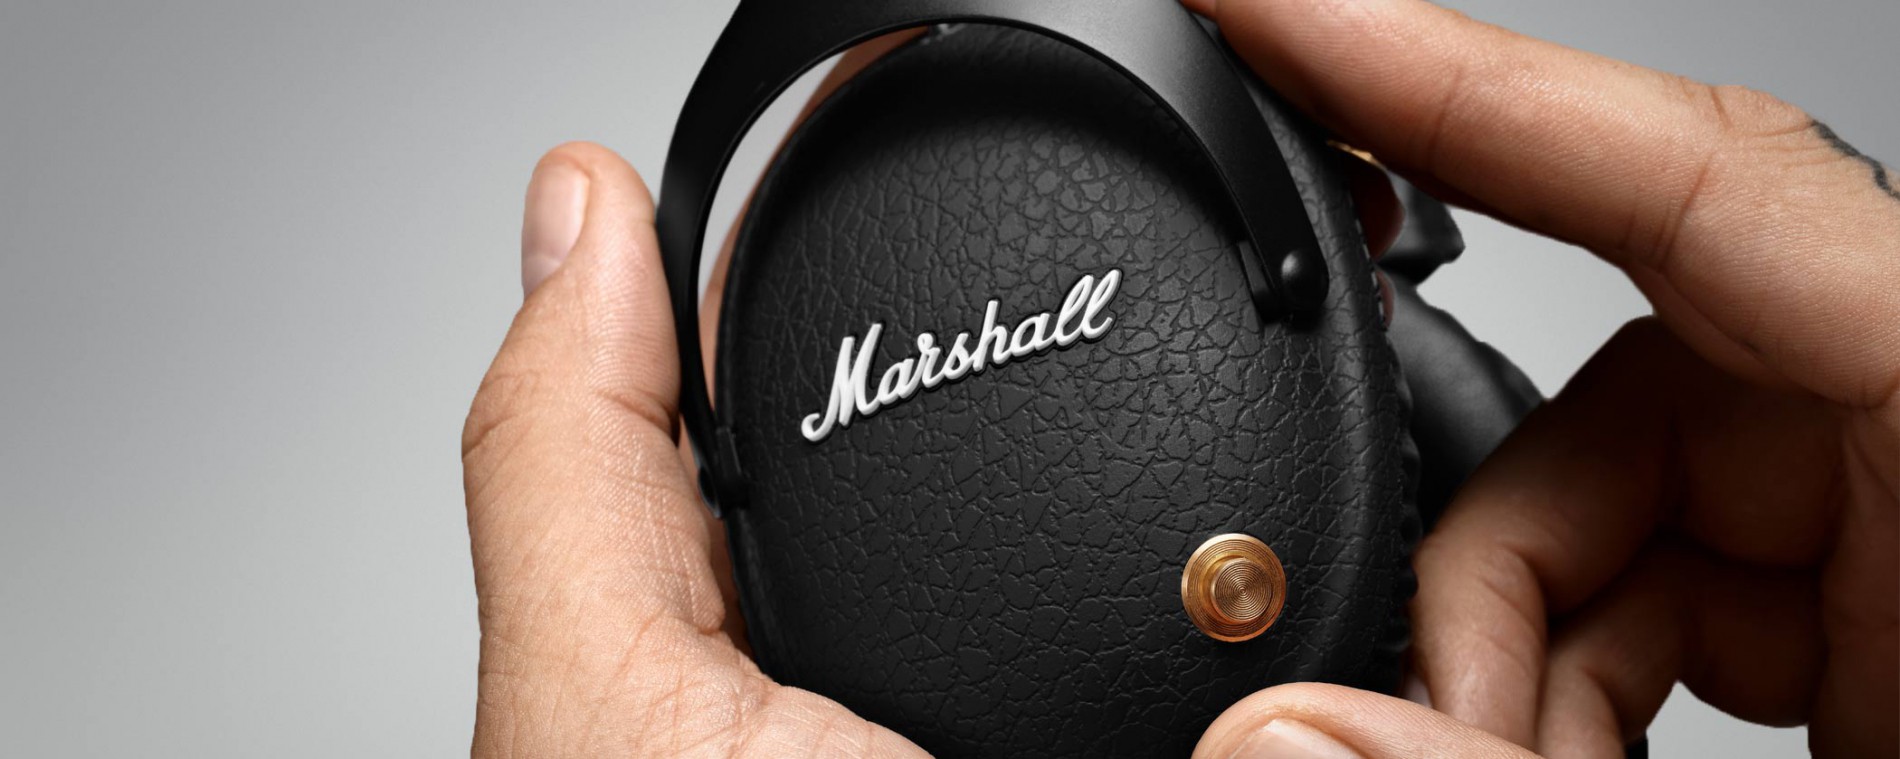 Marshall Monitor over the ear headphones